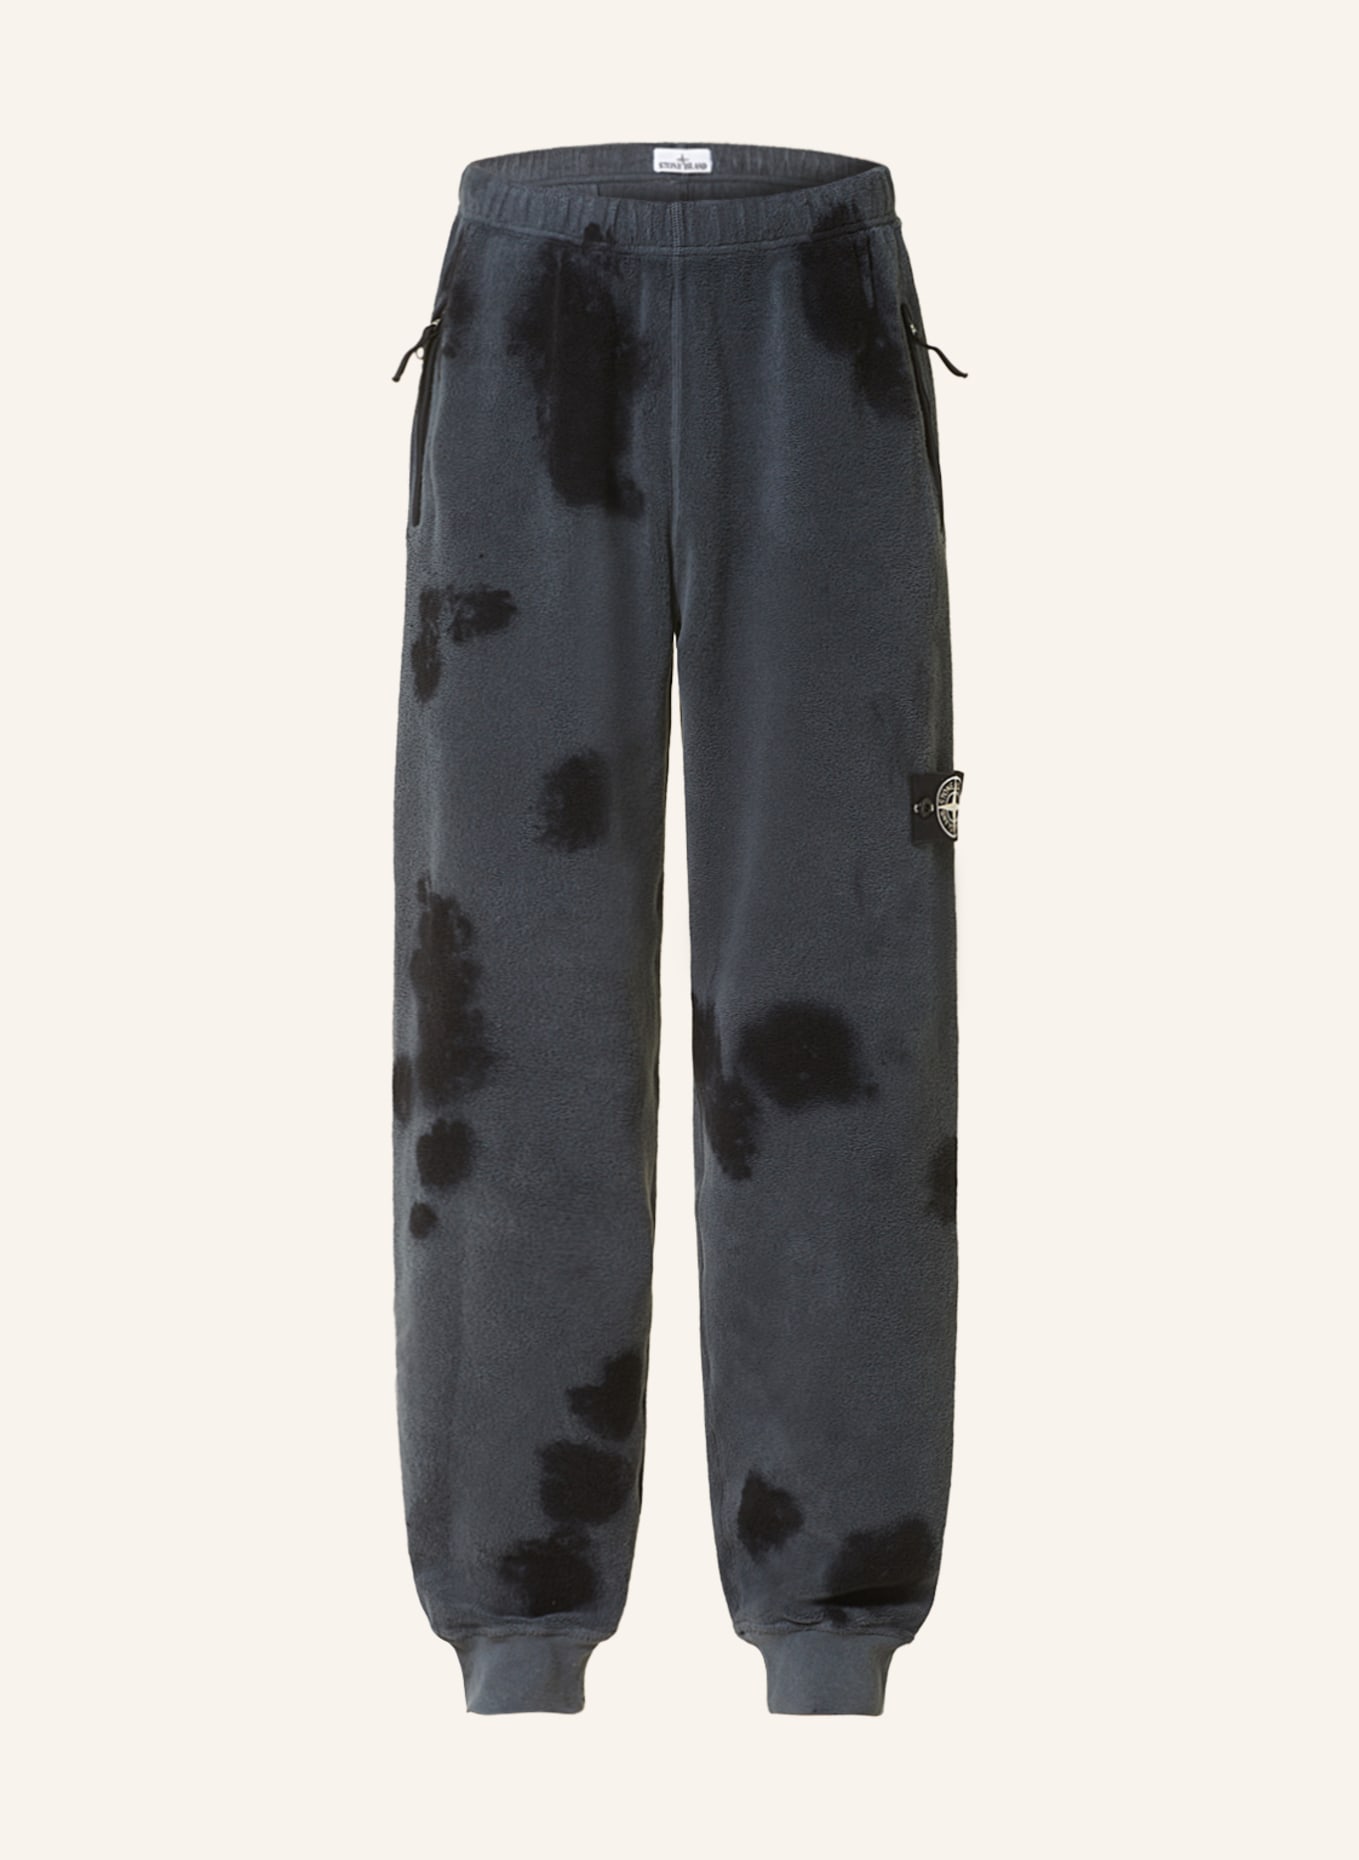 STONE ISLAND Fleece pants in jogger style, Color: DARK GRAY/ BLACK (Image 1)